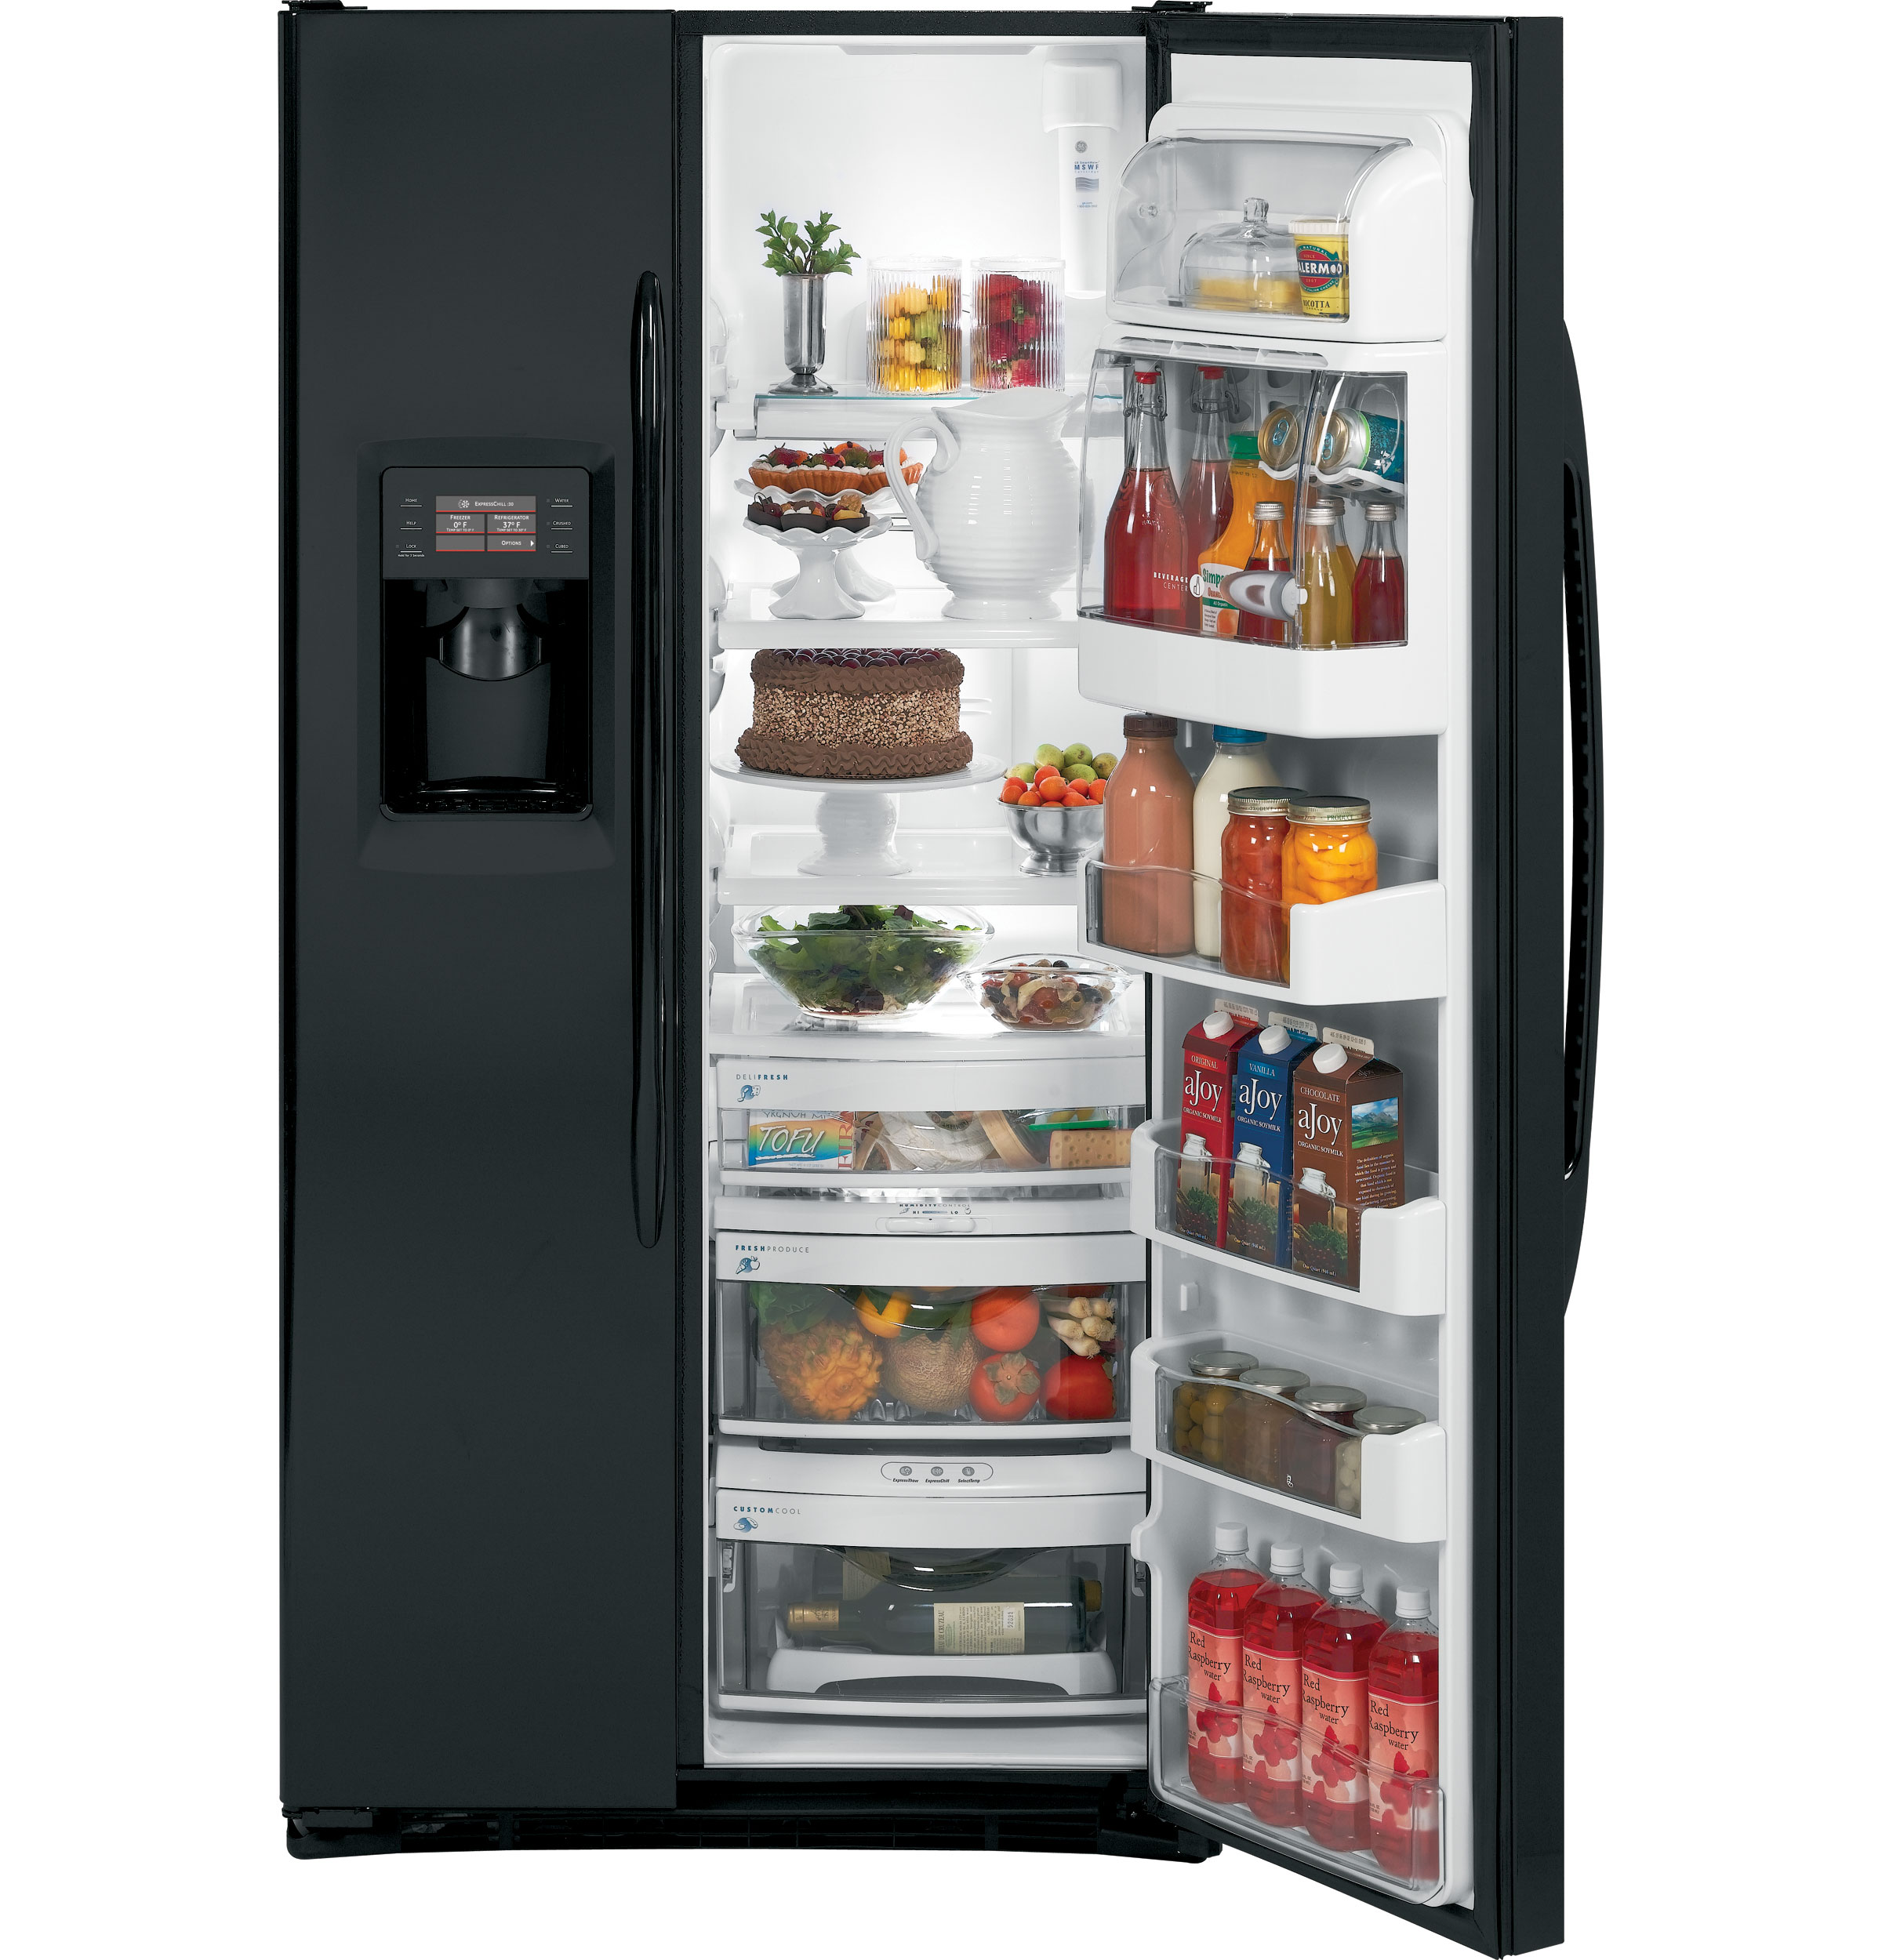 GE Profile™ ENERGY STAR® 24.6 Cu. Ft. Side-by-Side Refrigerator